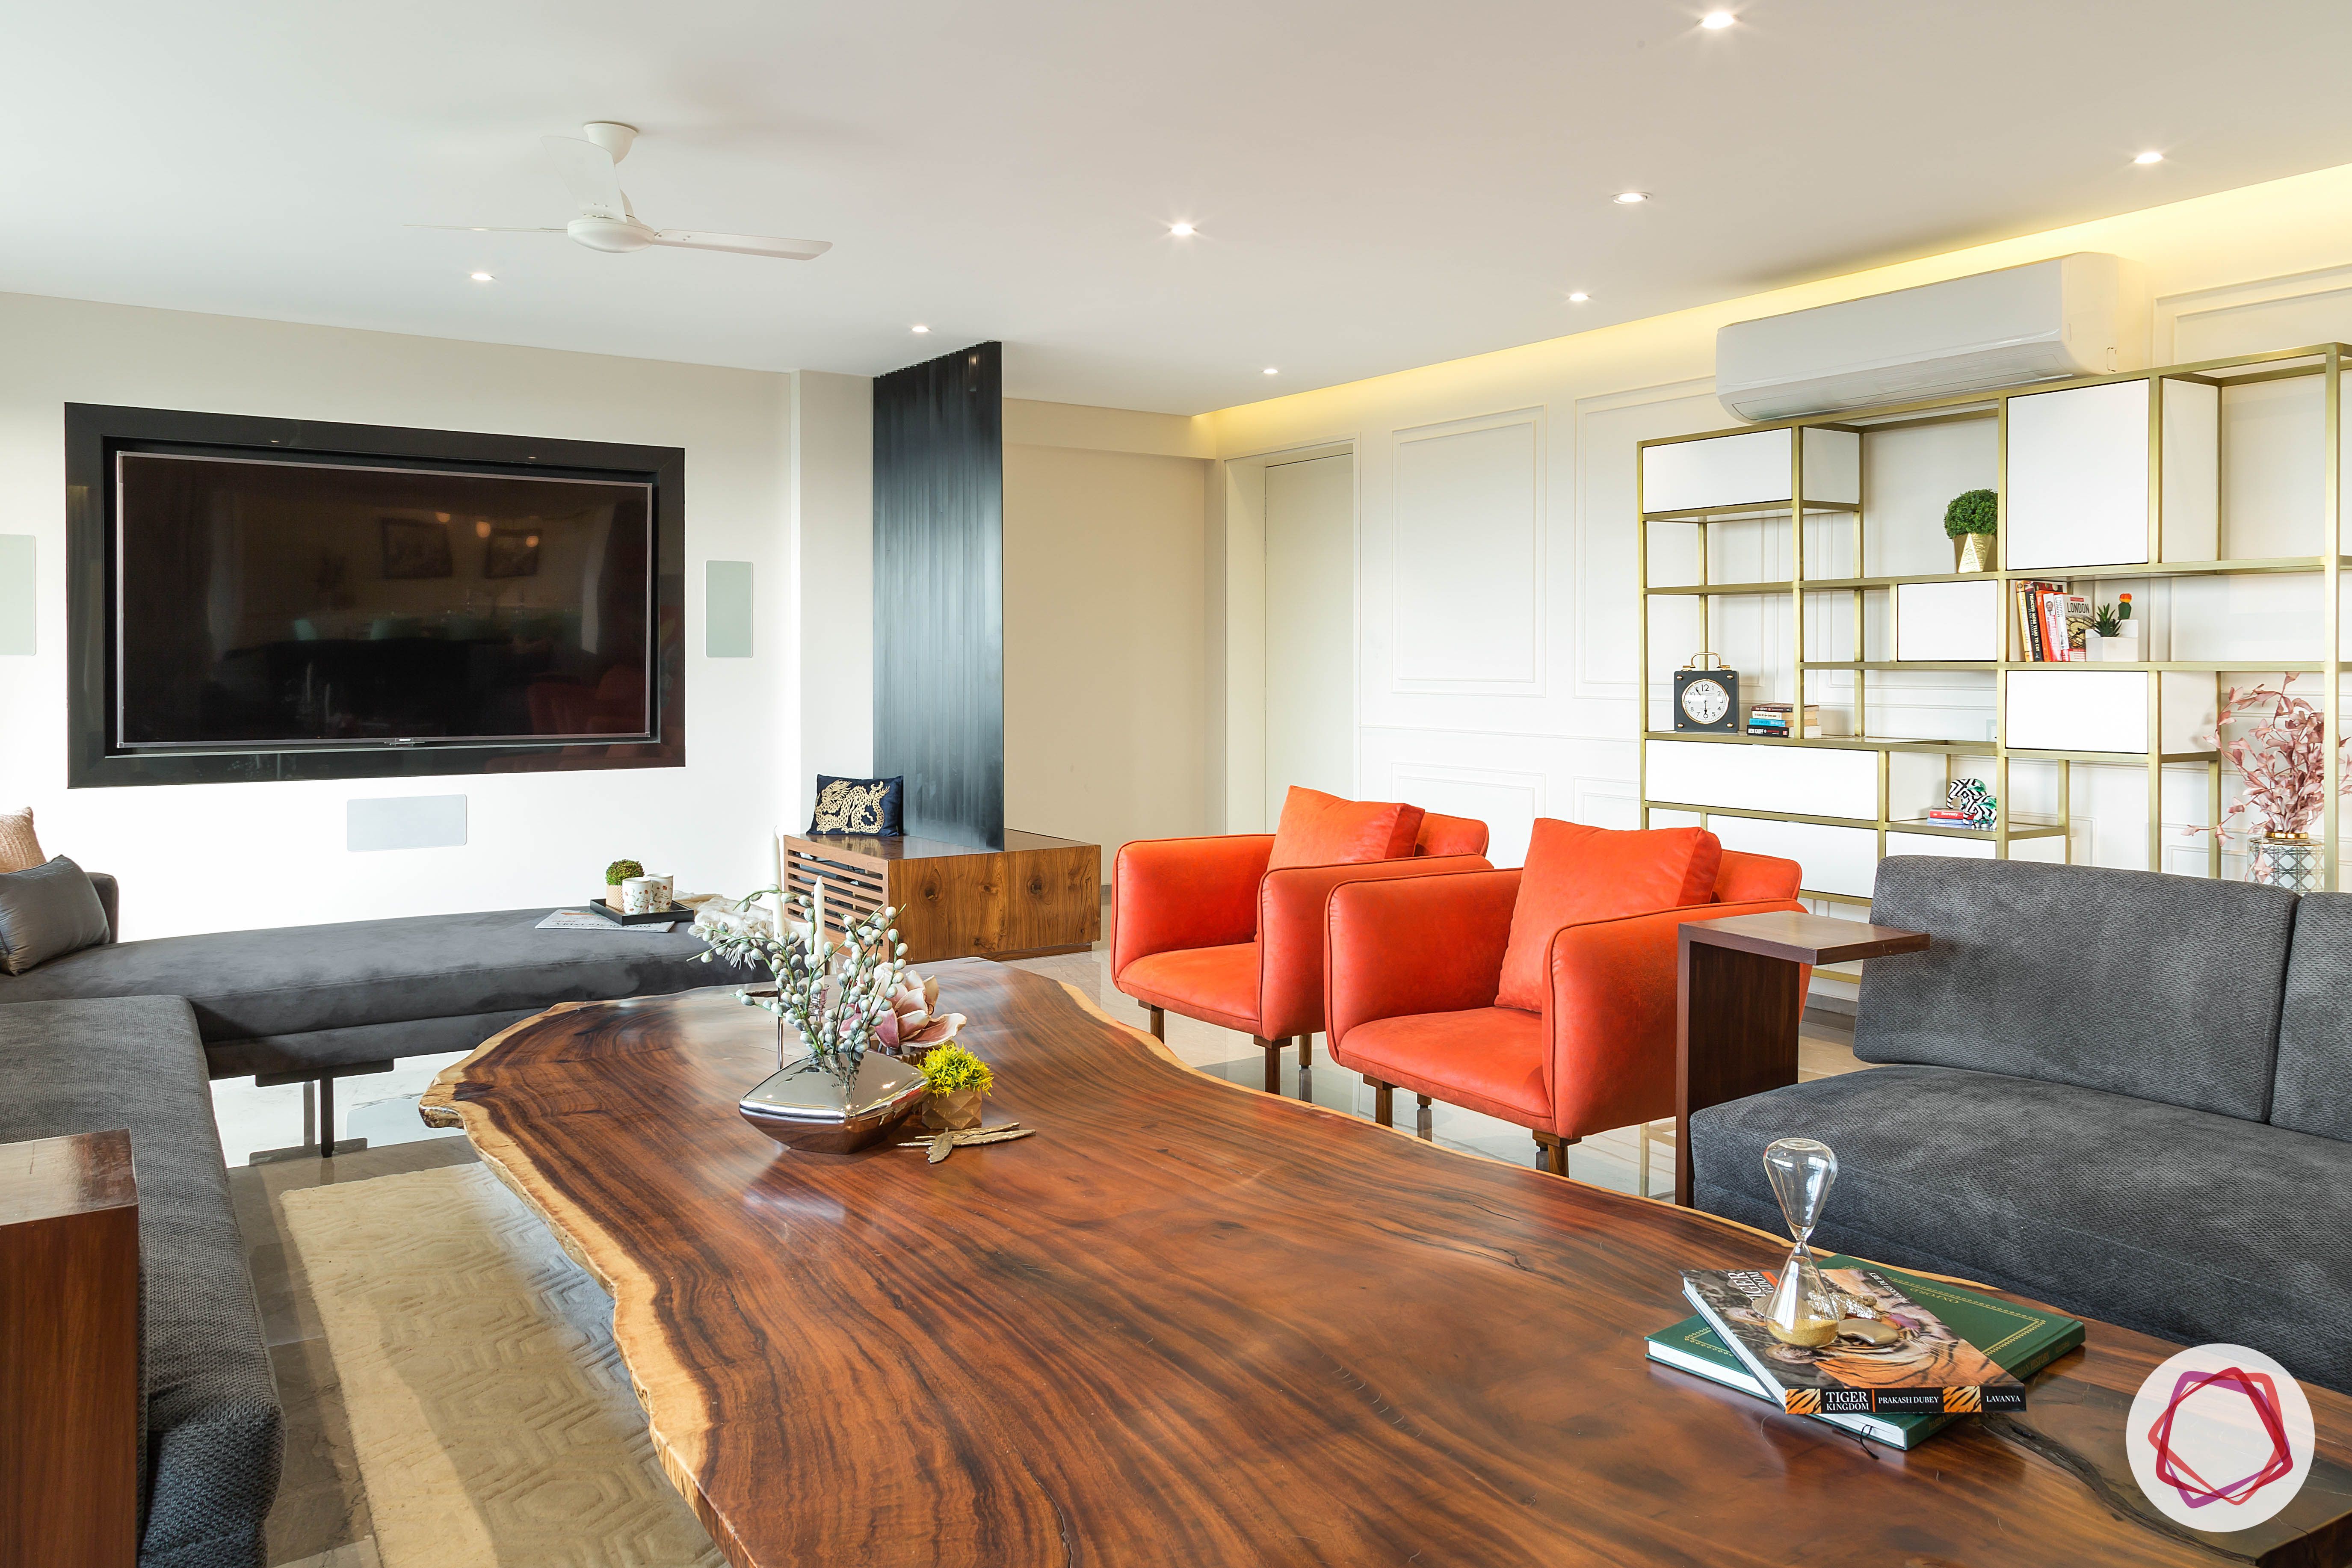 4bhk house plan-l-shaped sofa-orange armchairs-sofa designs-grey sofa-living room furniture-simple media wall